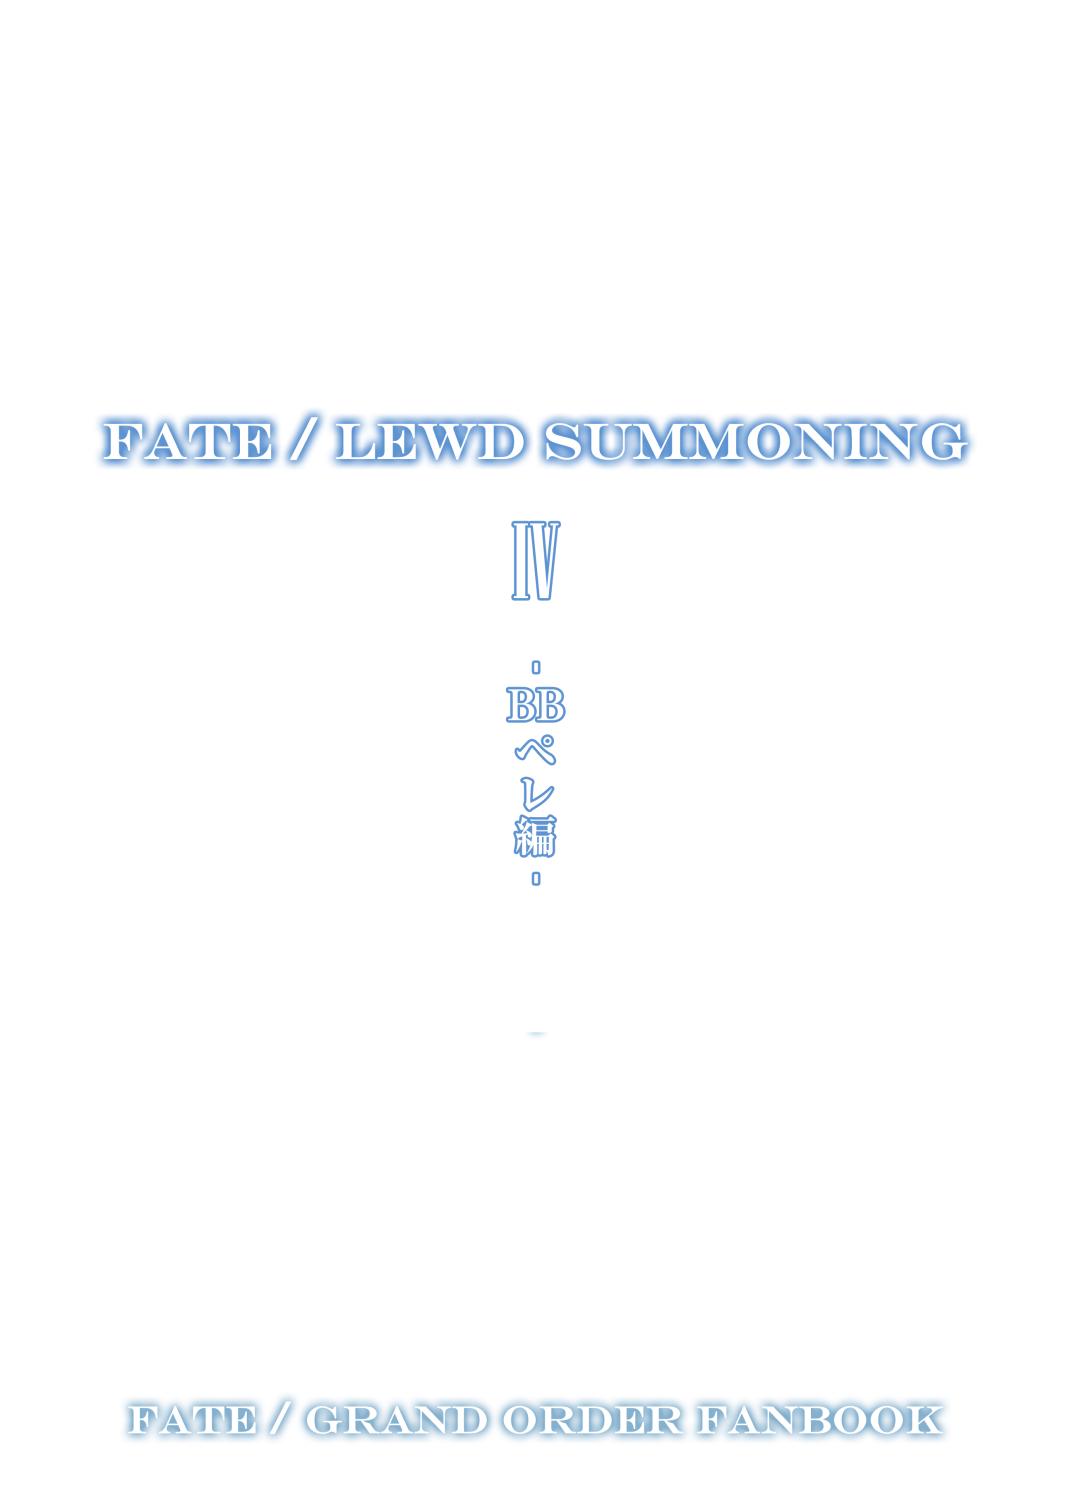 Fate/Lewd Summoning 4 1